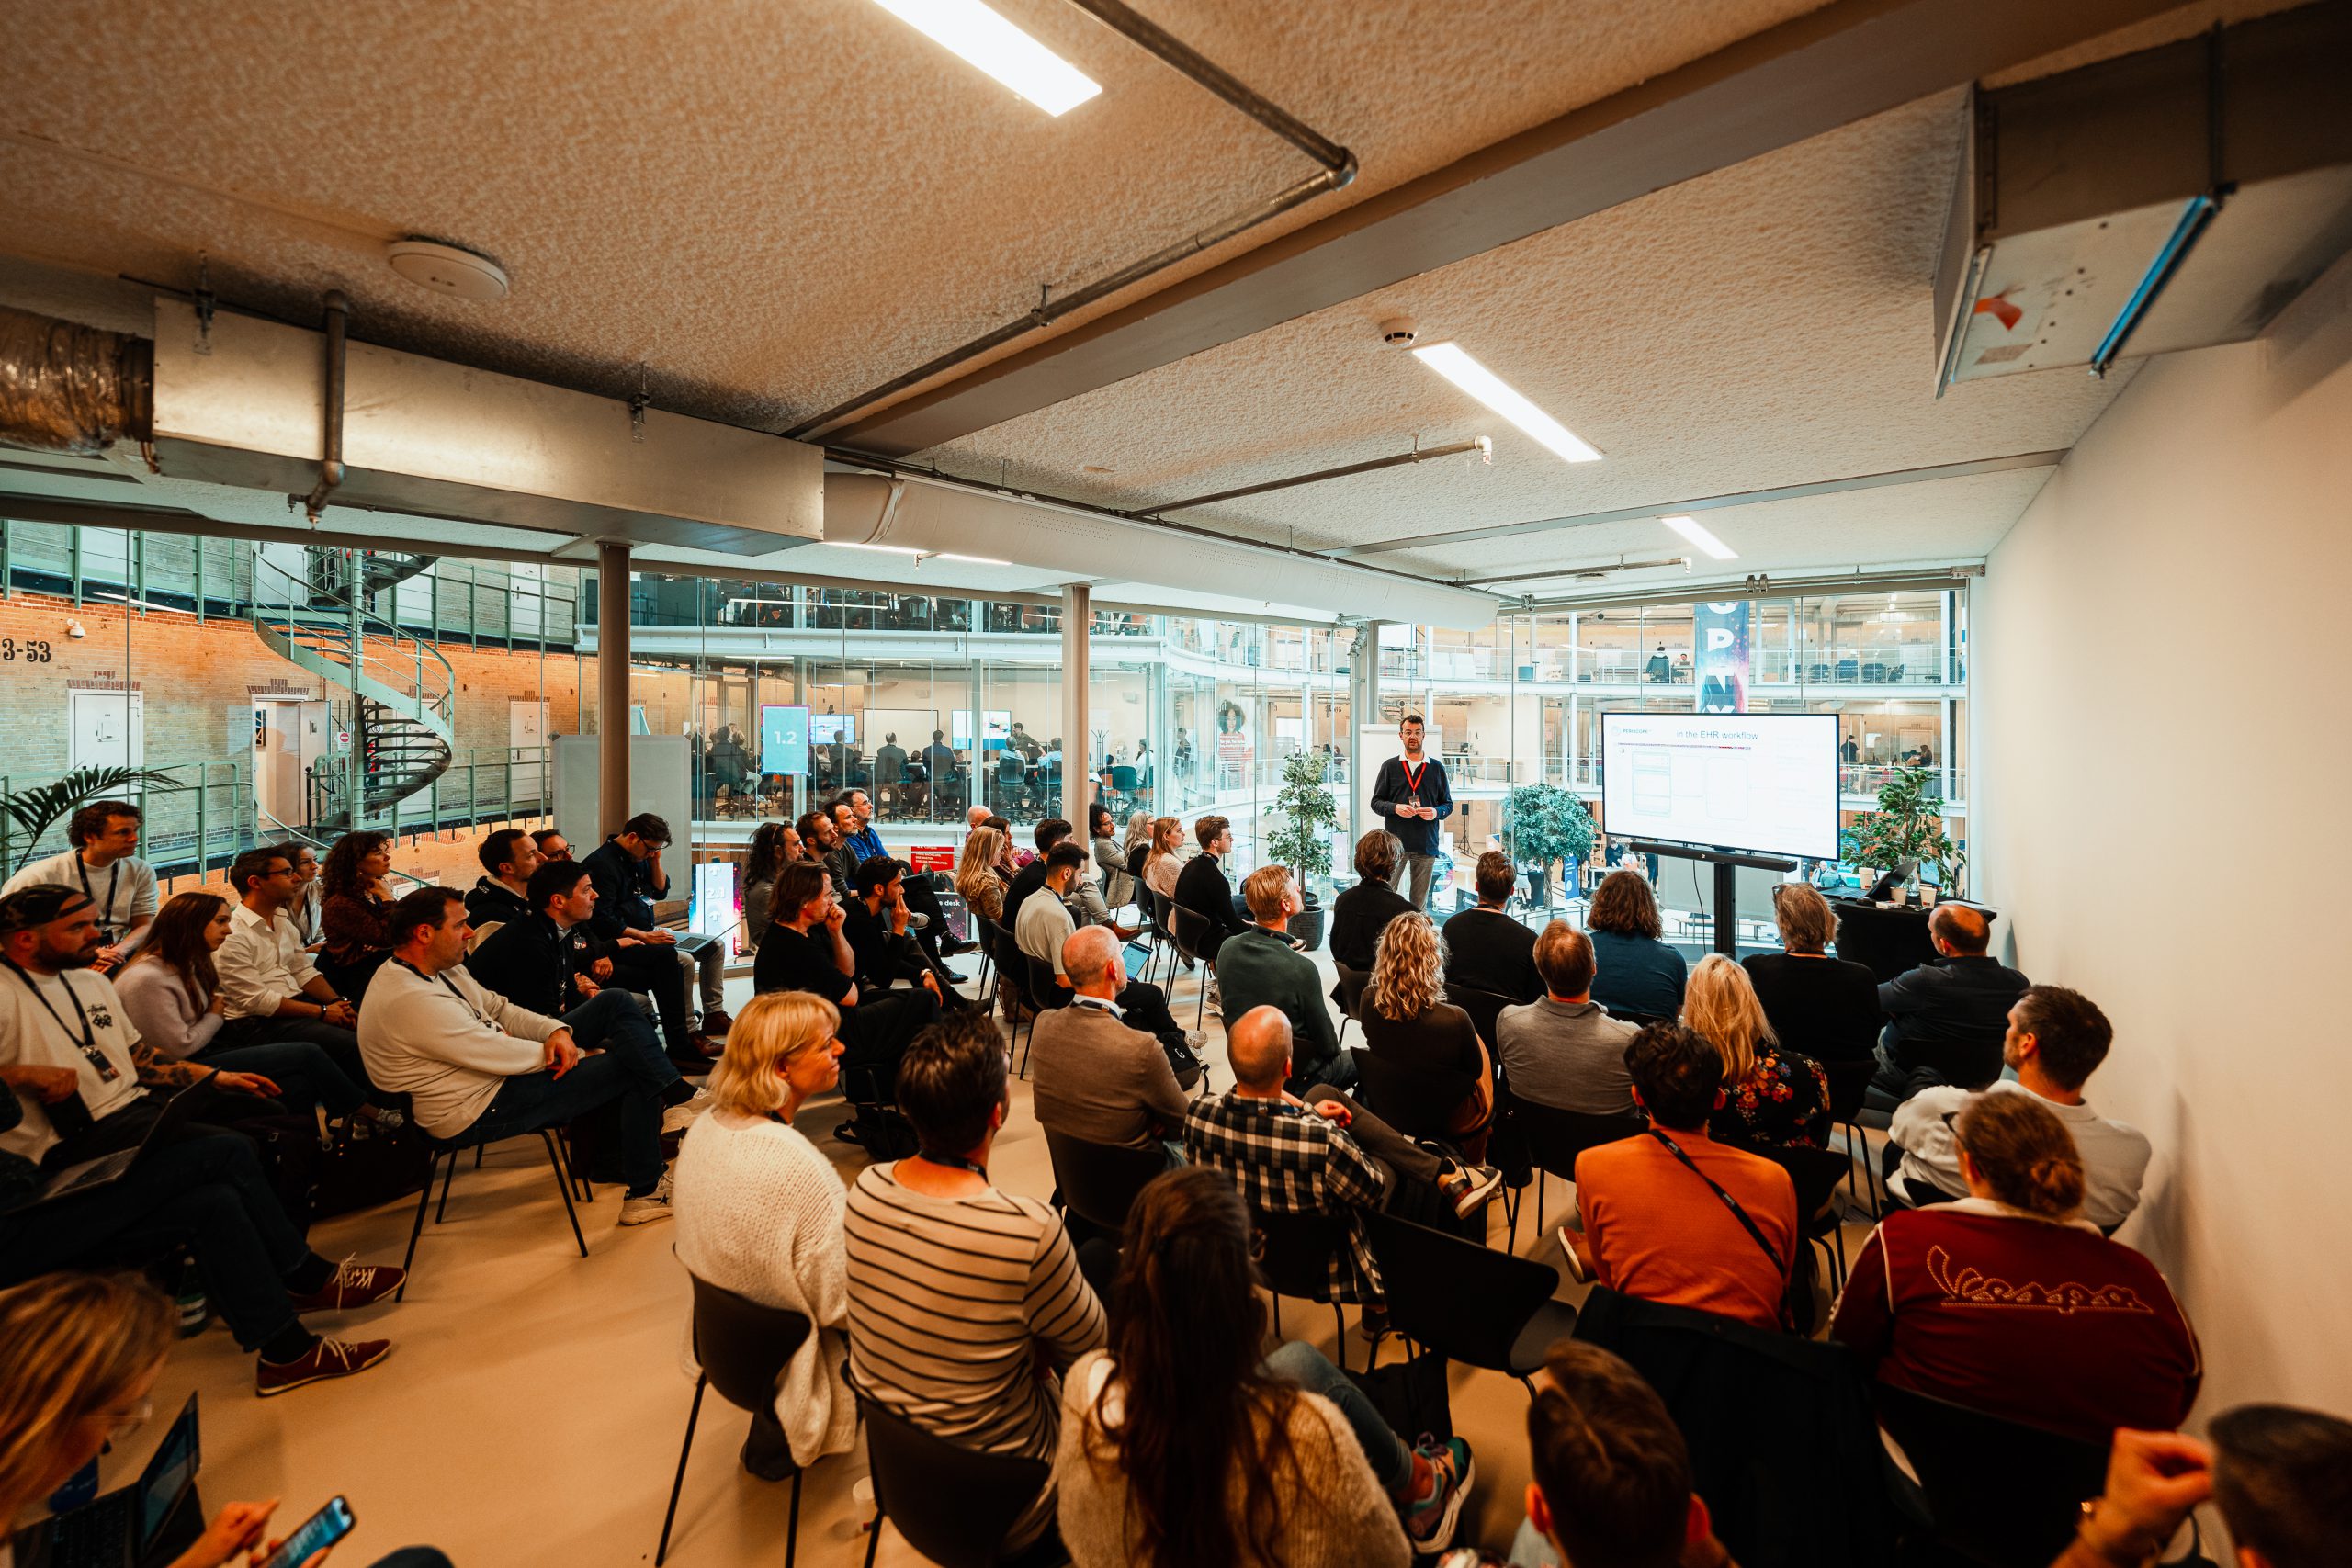 AI-event in Nederland volledig uitverkocht